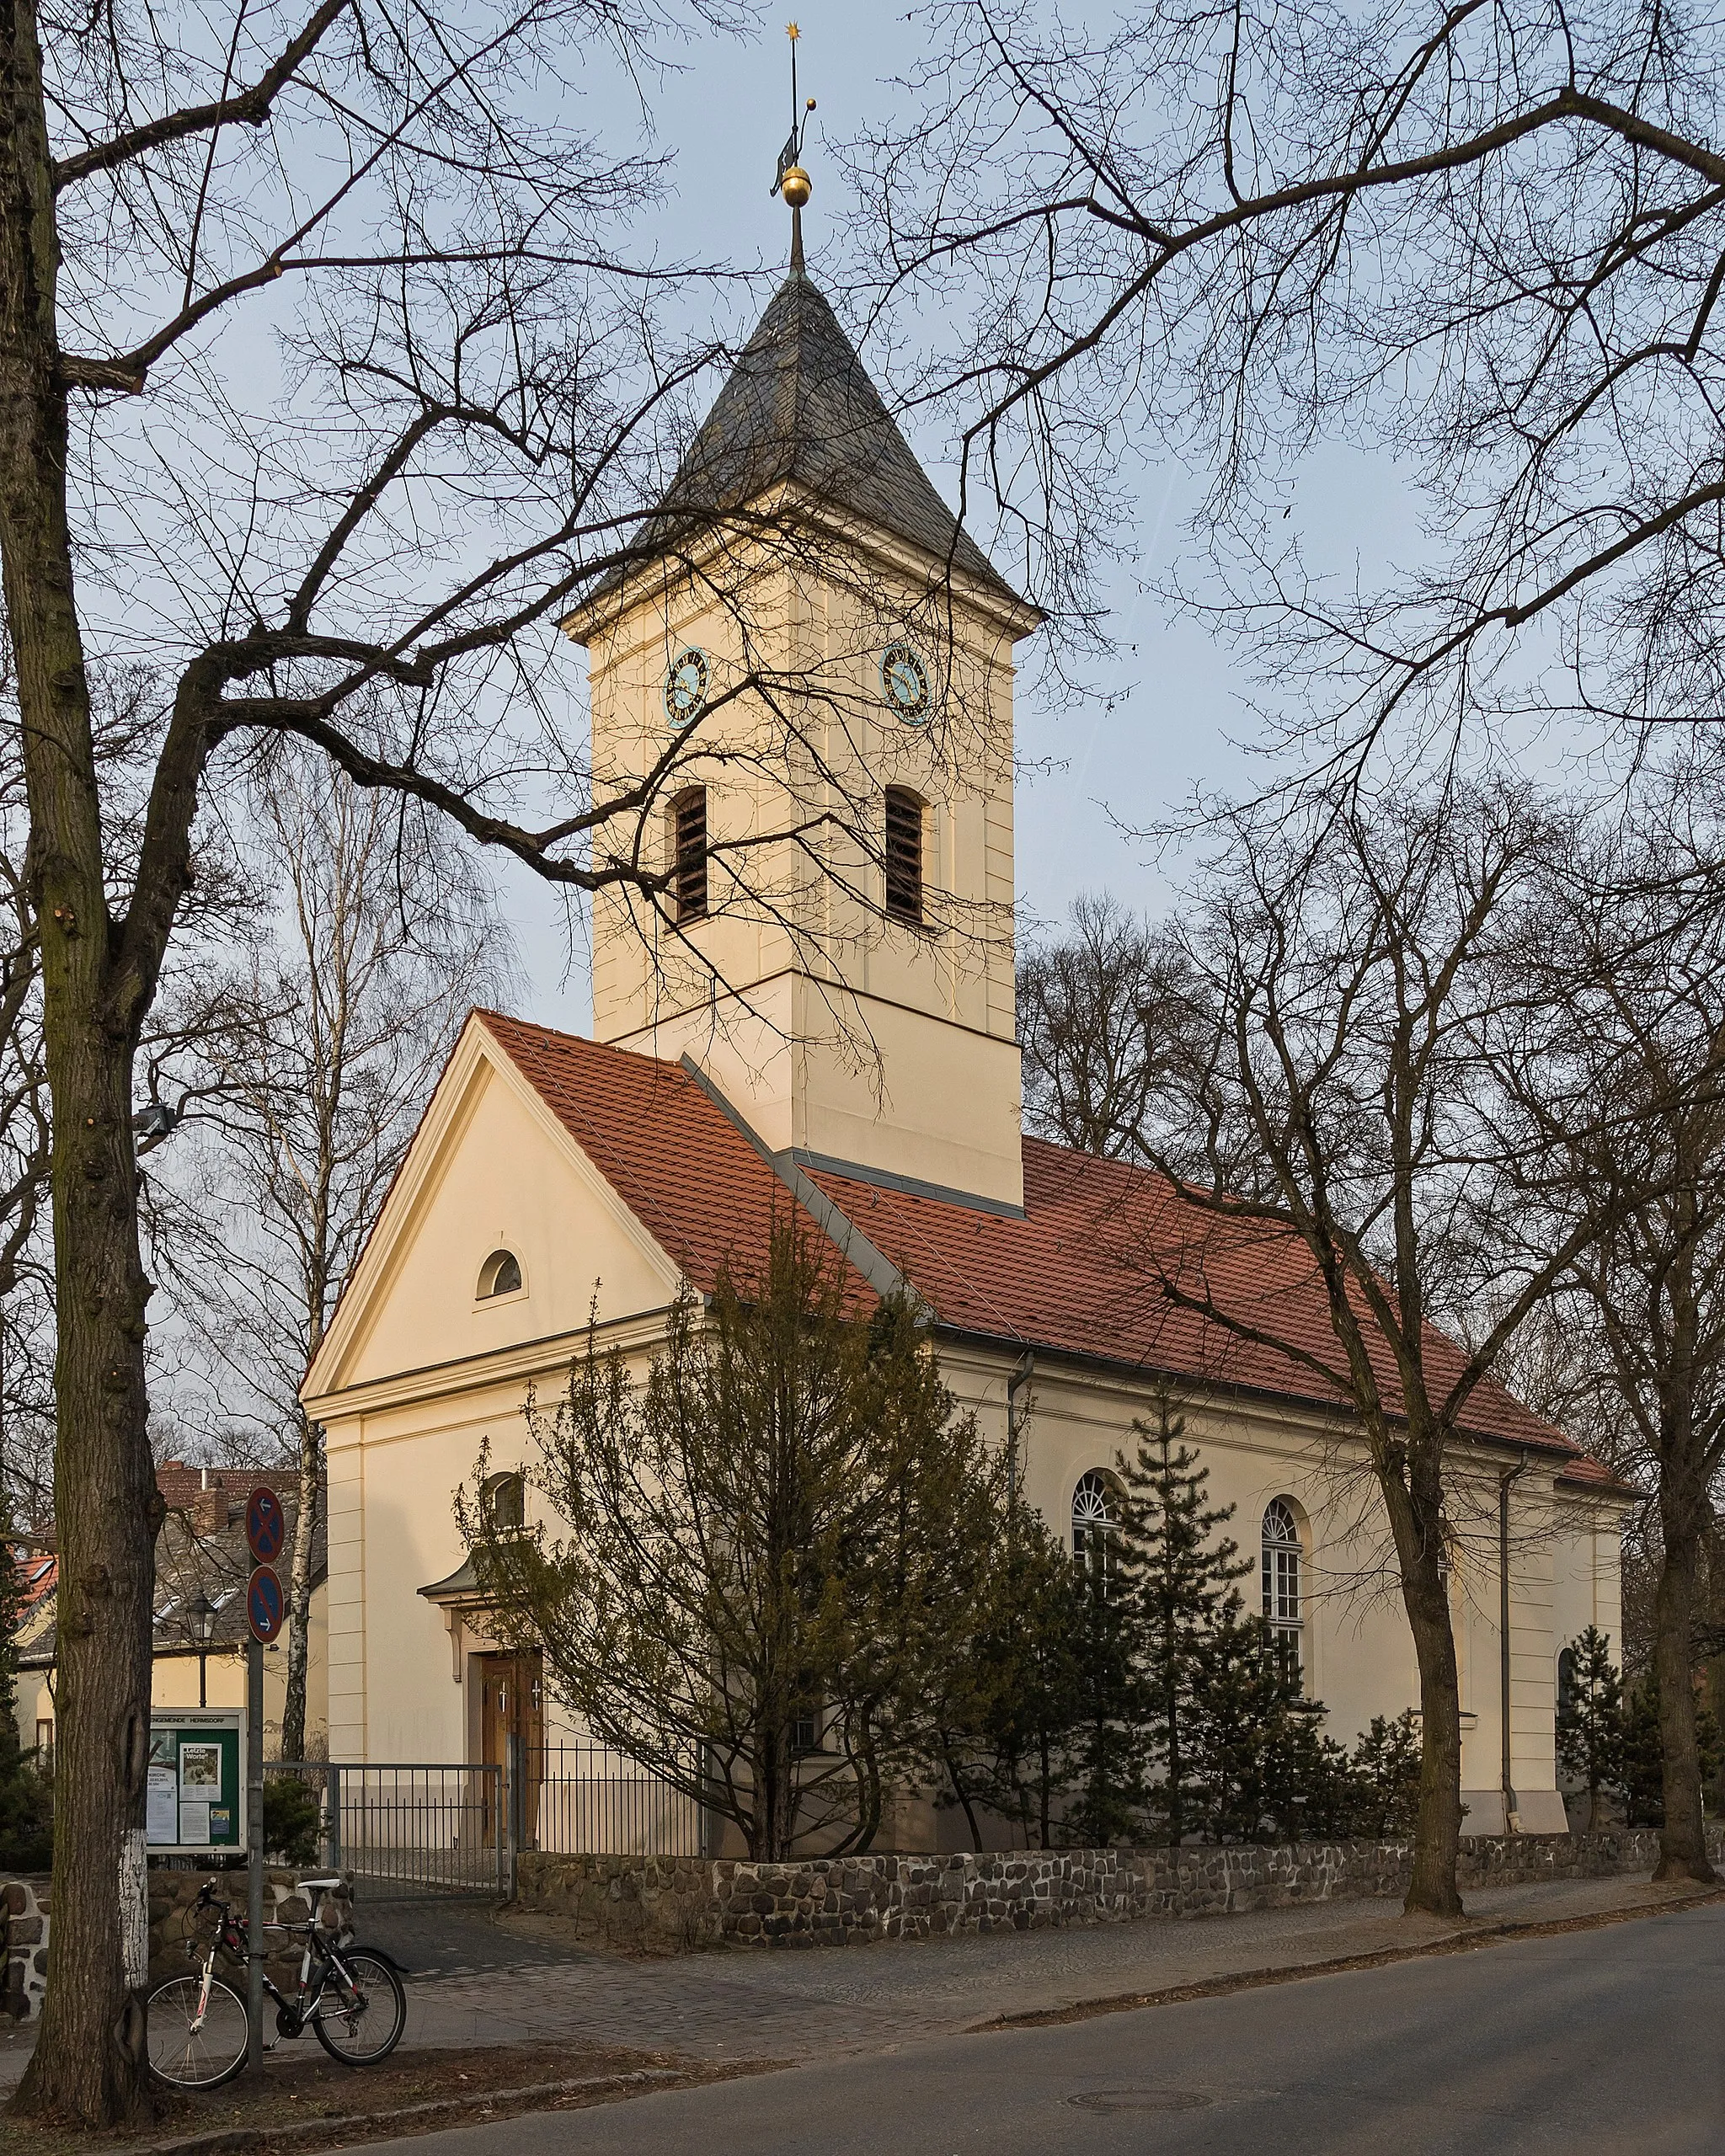 Photo showing: Village church of Hermsdorf in Berlin